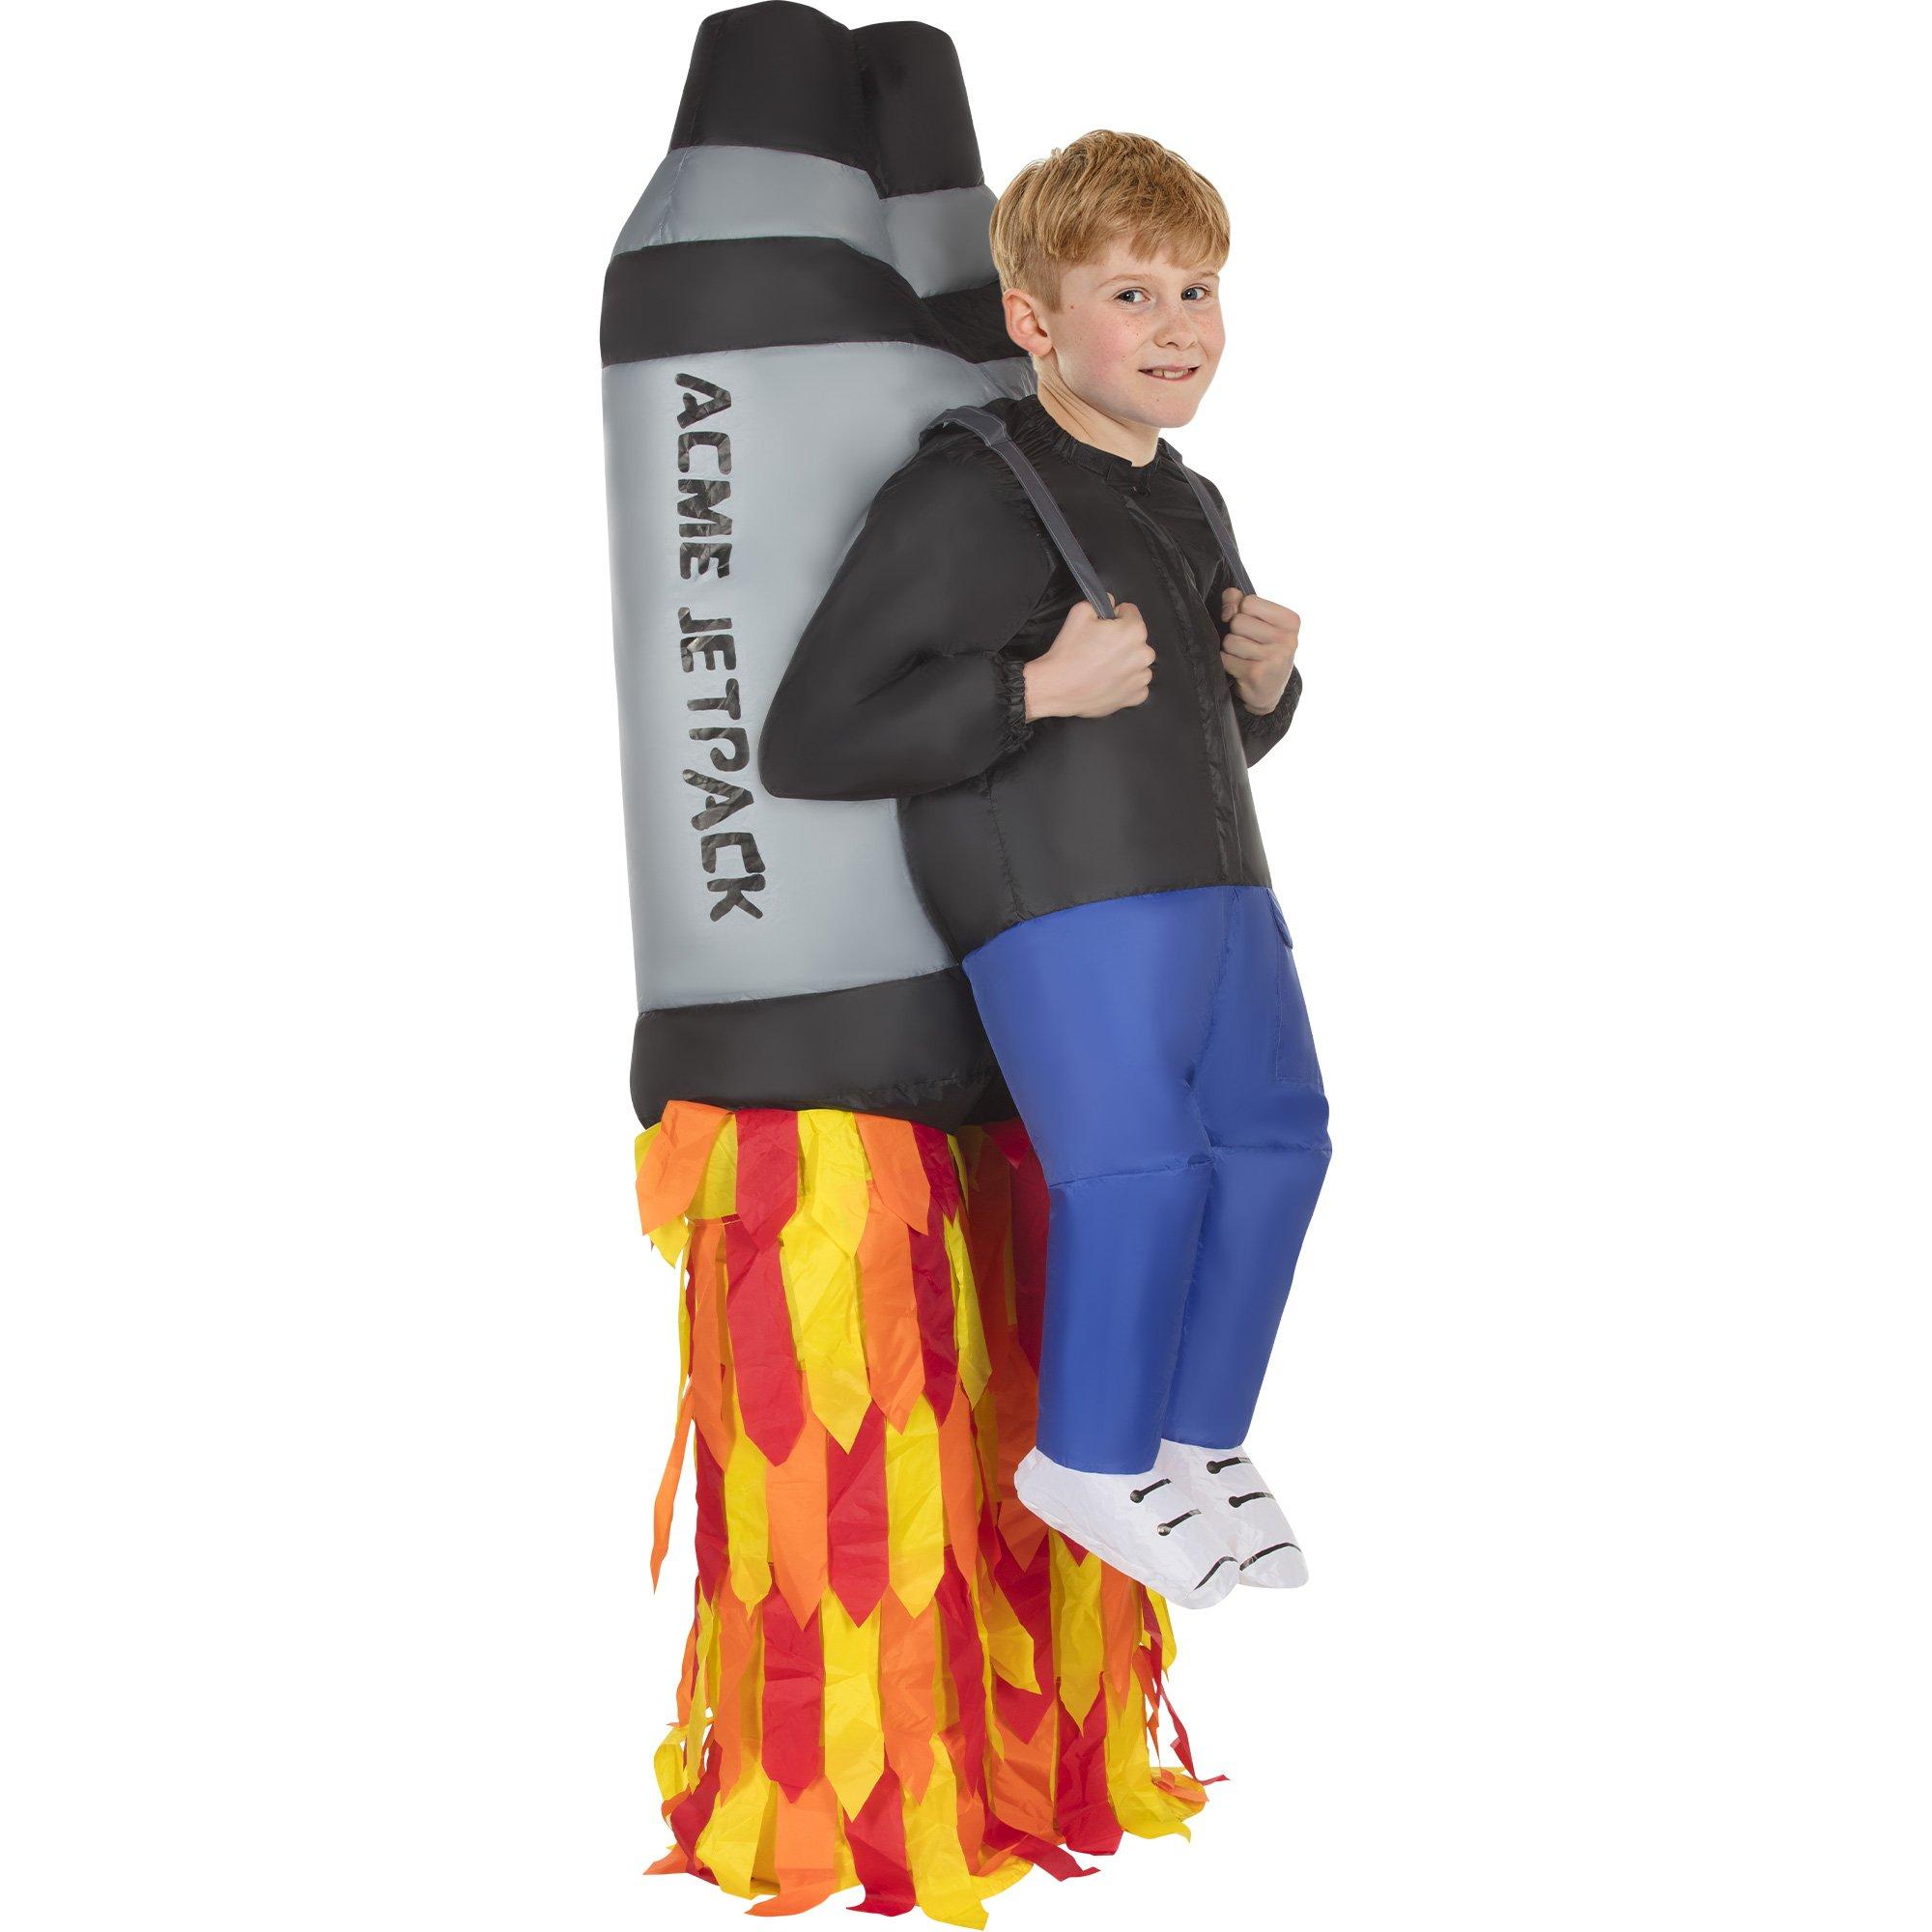 Kids' Inflatable Jetpack Costume